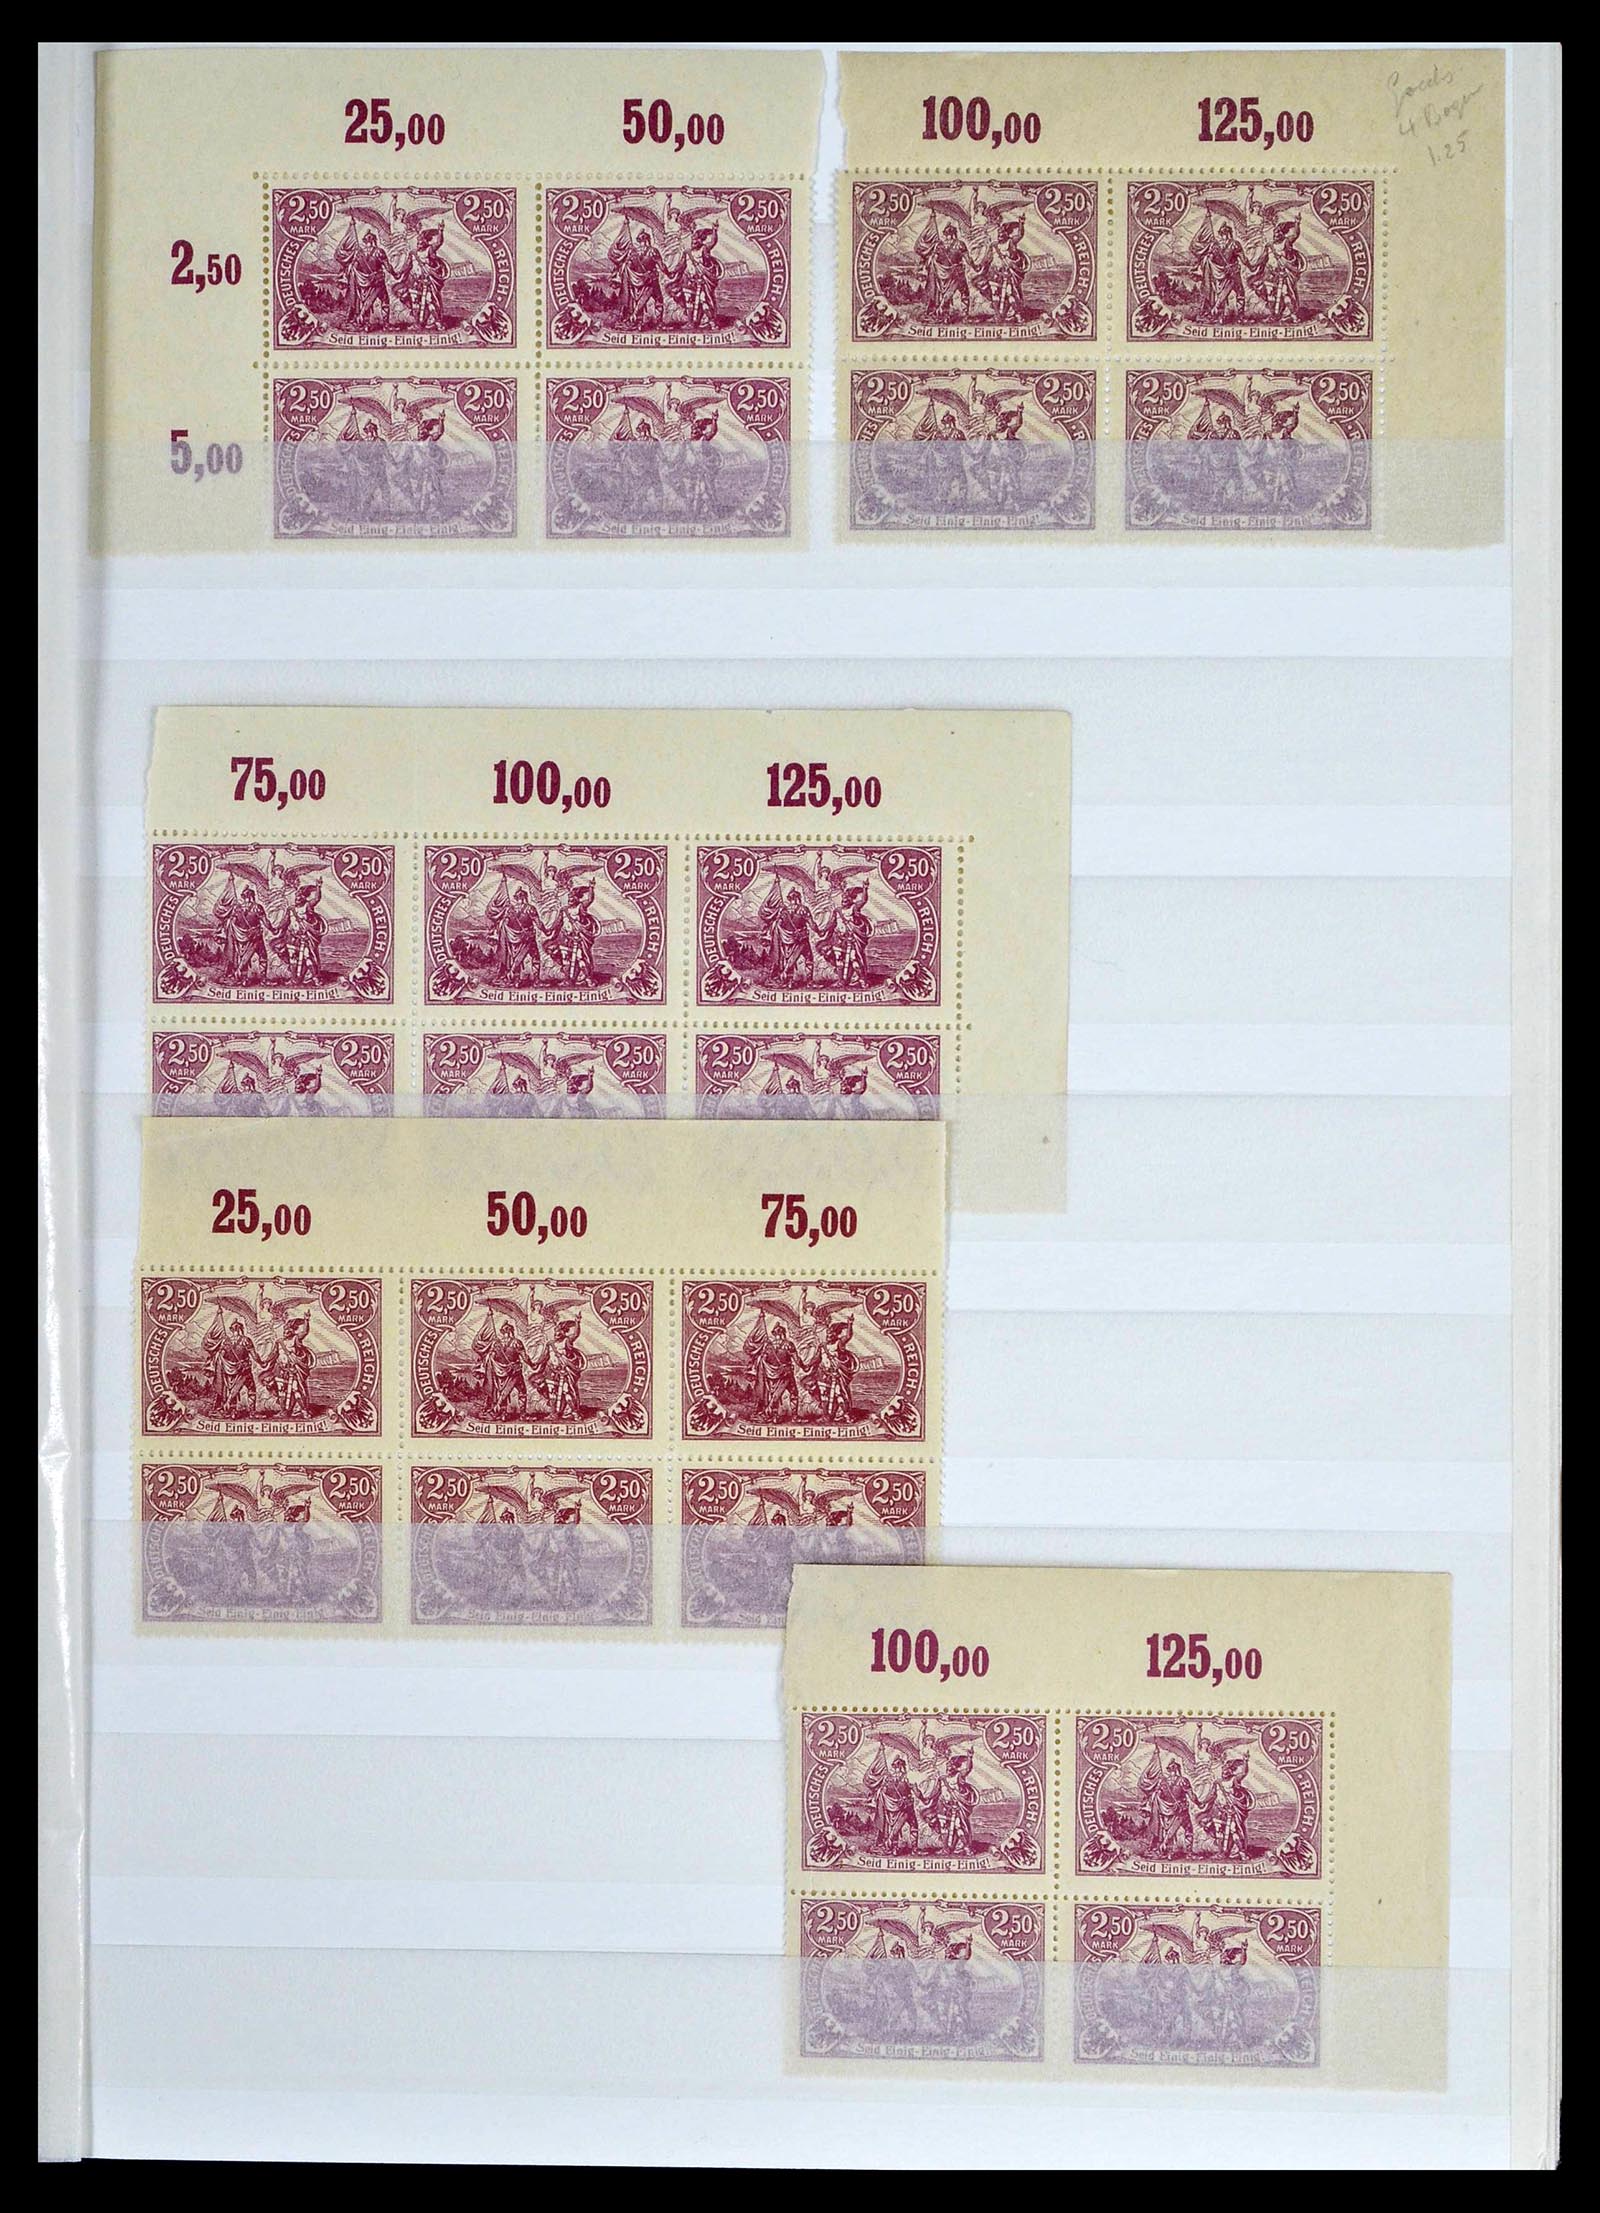 39254 0005 - Stamp collection 39254 German Reich MNH top margins.